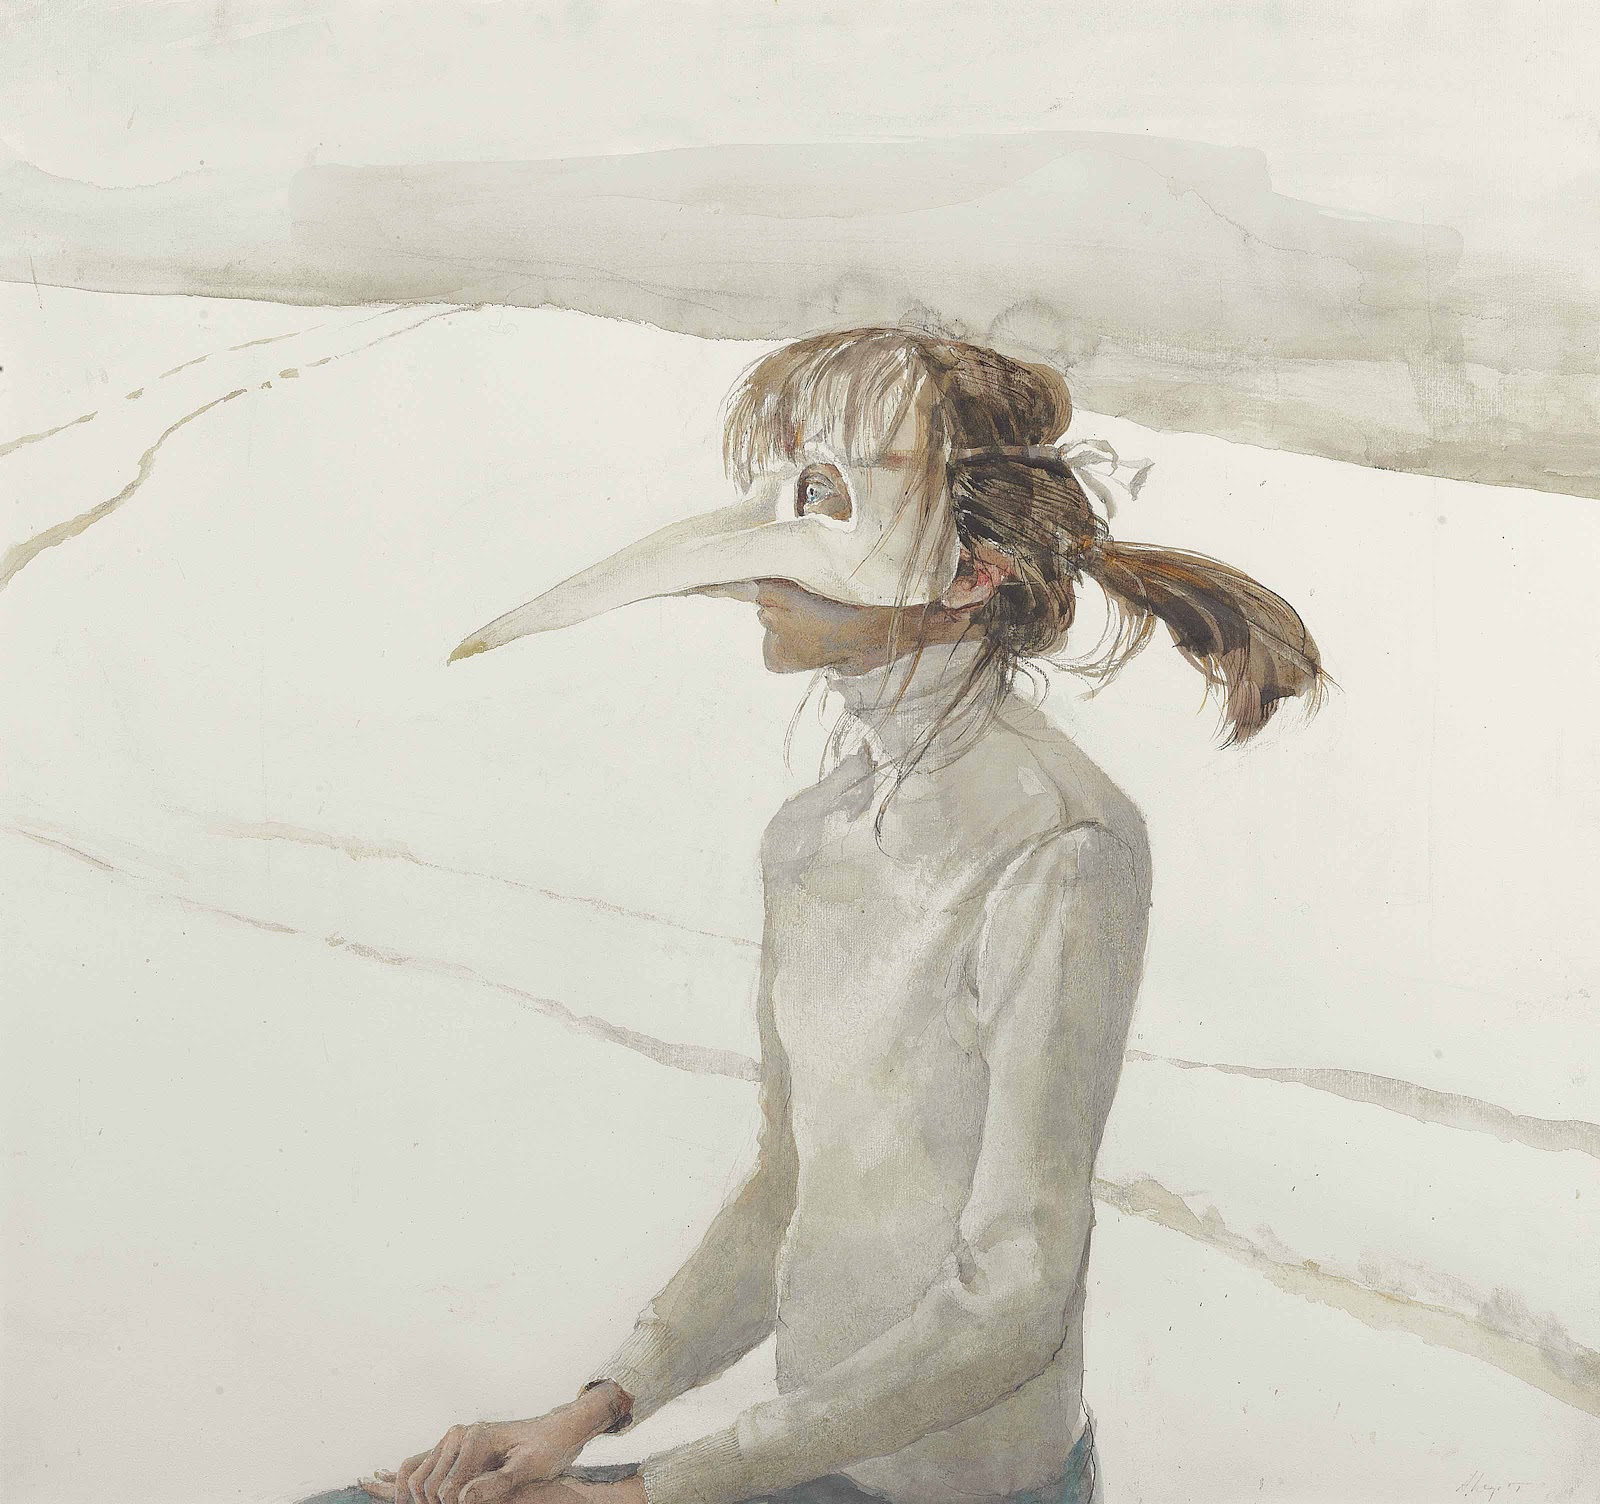 Andrew+Wyeth-1917-2009 (44).jpg